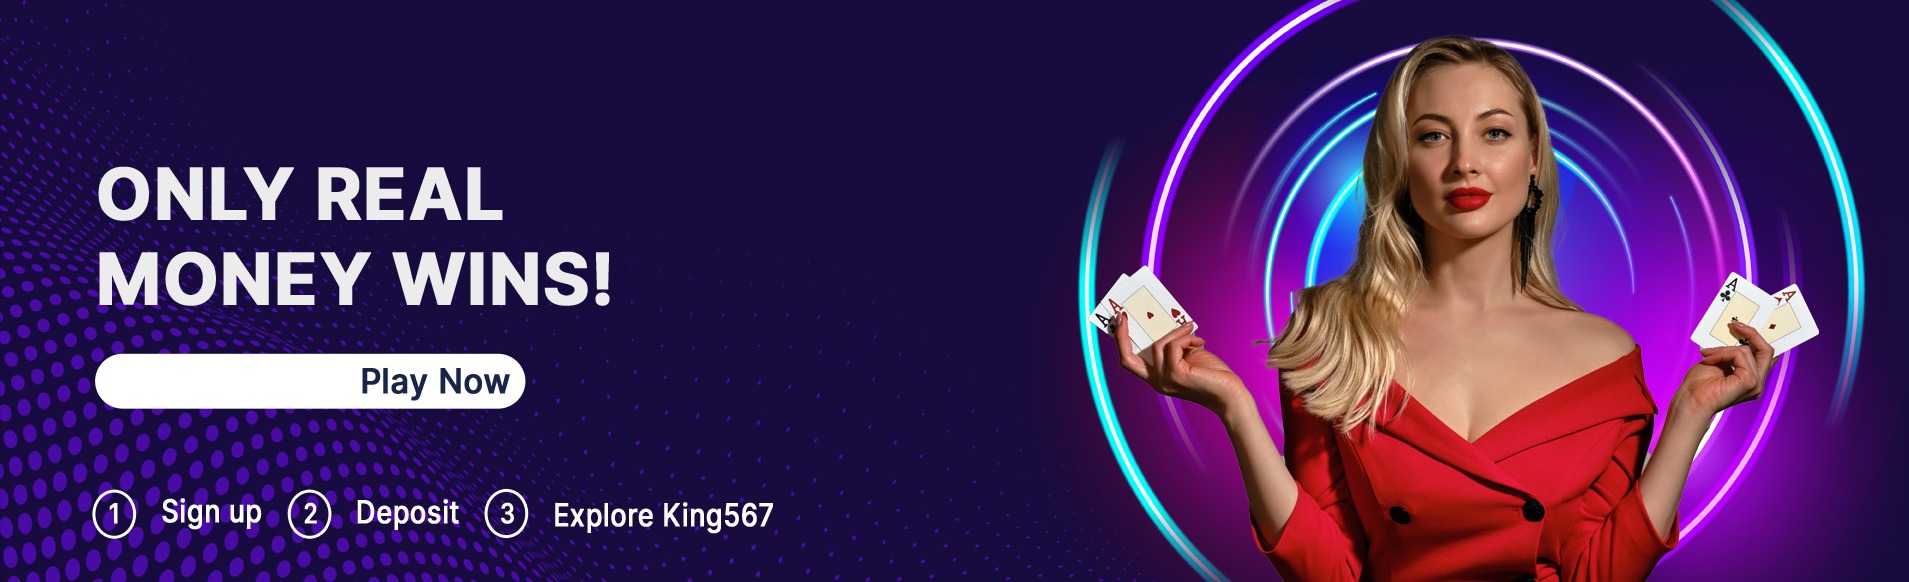 King567 | King567 Casino Login & Registration | Get 150% up to ₹25,000